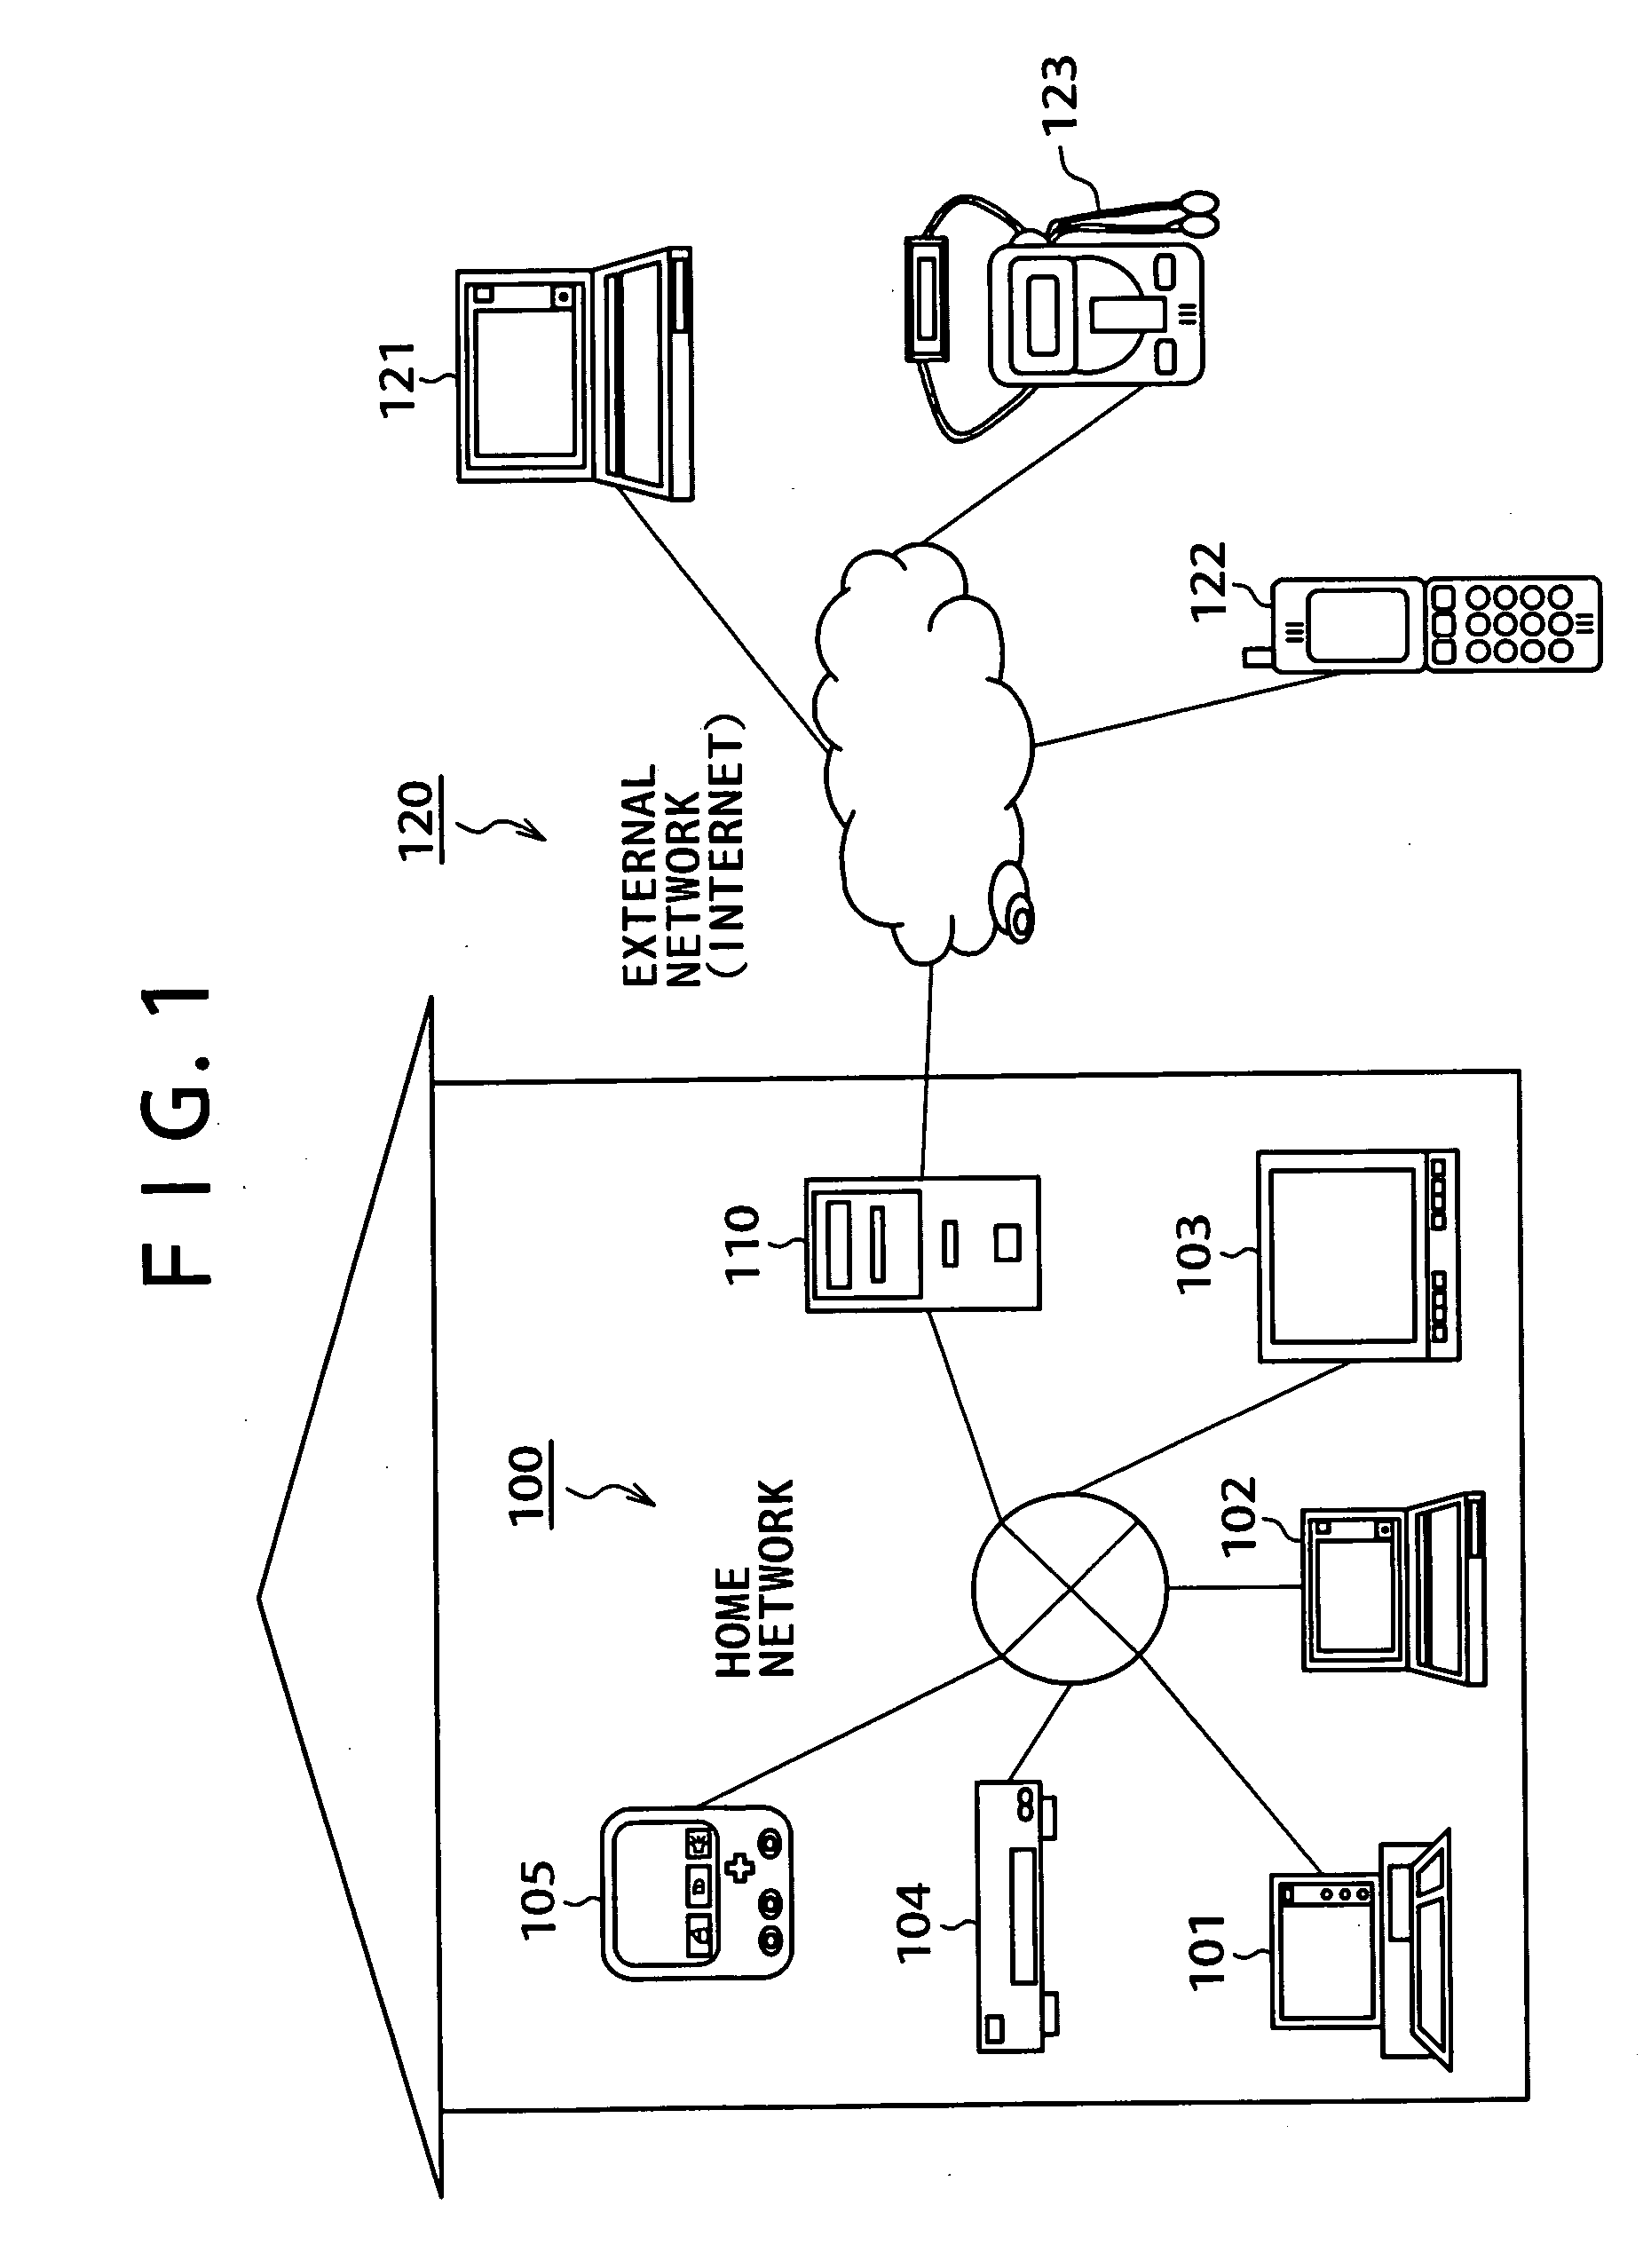 Communication processing apparatus, communication control method and computer program